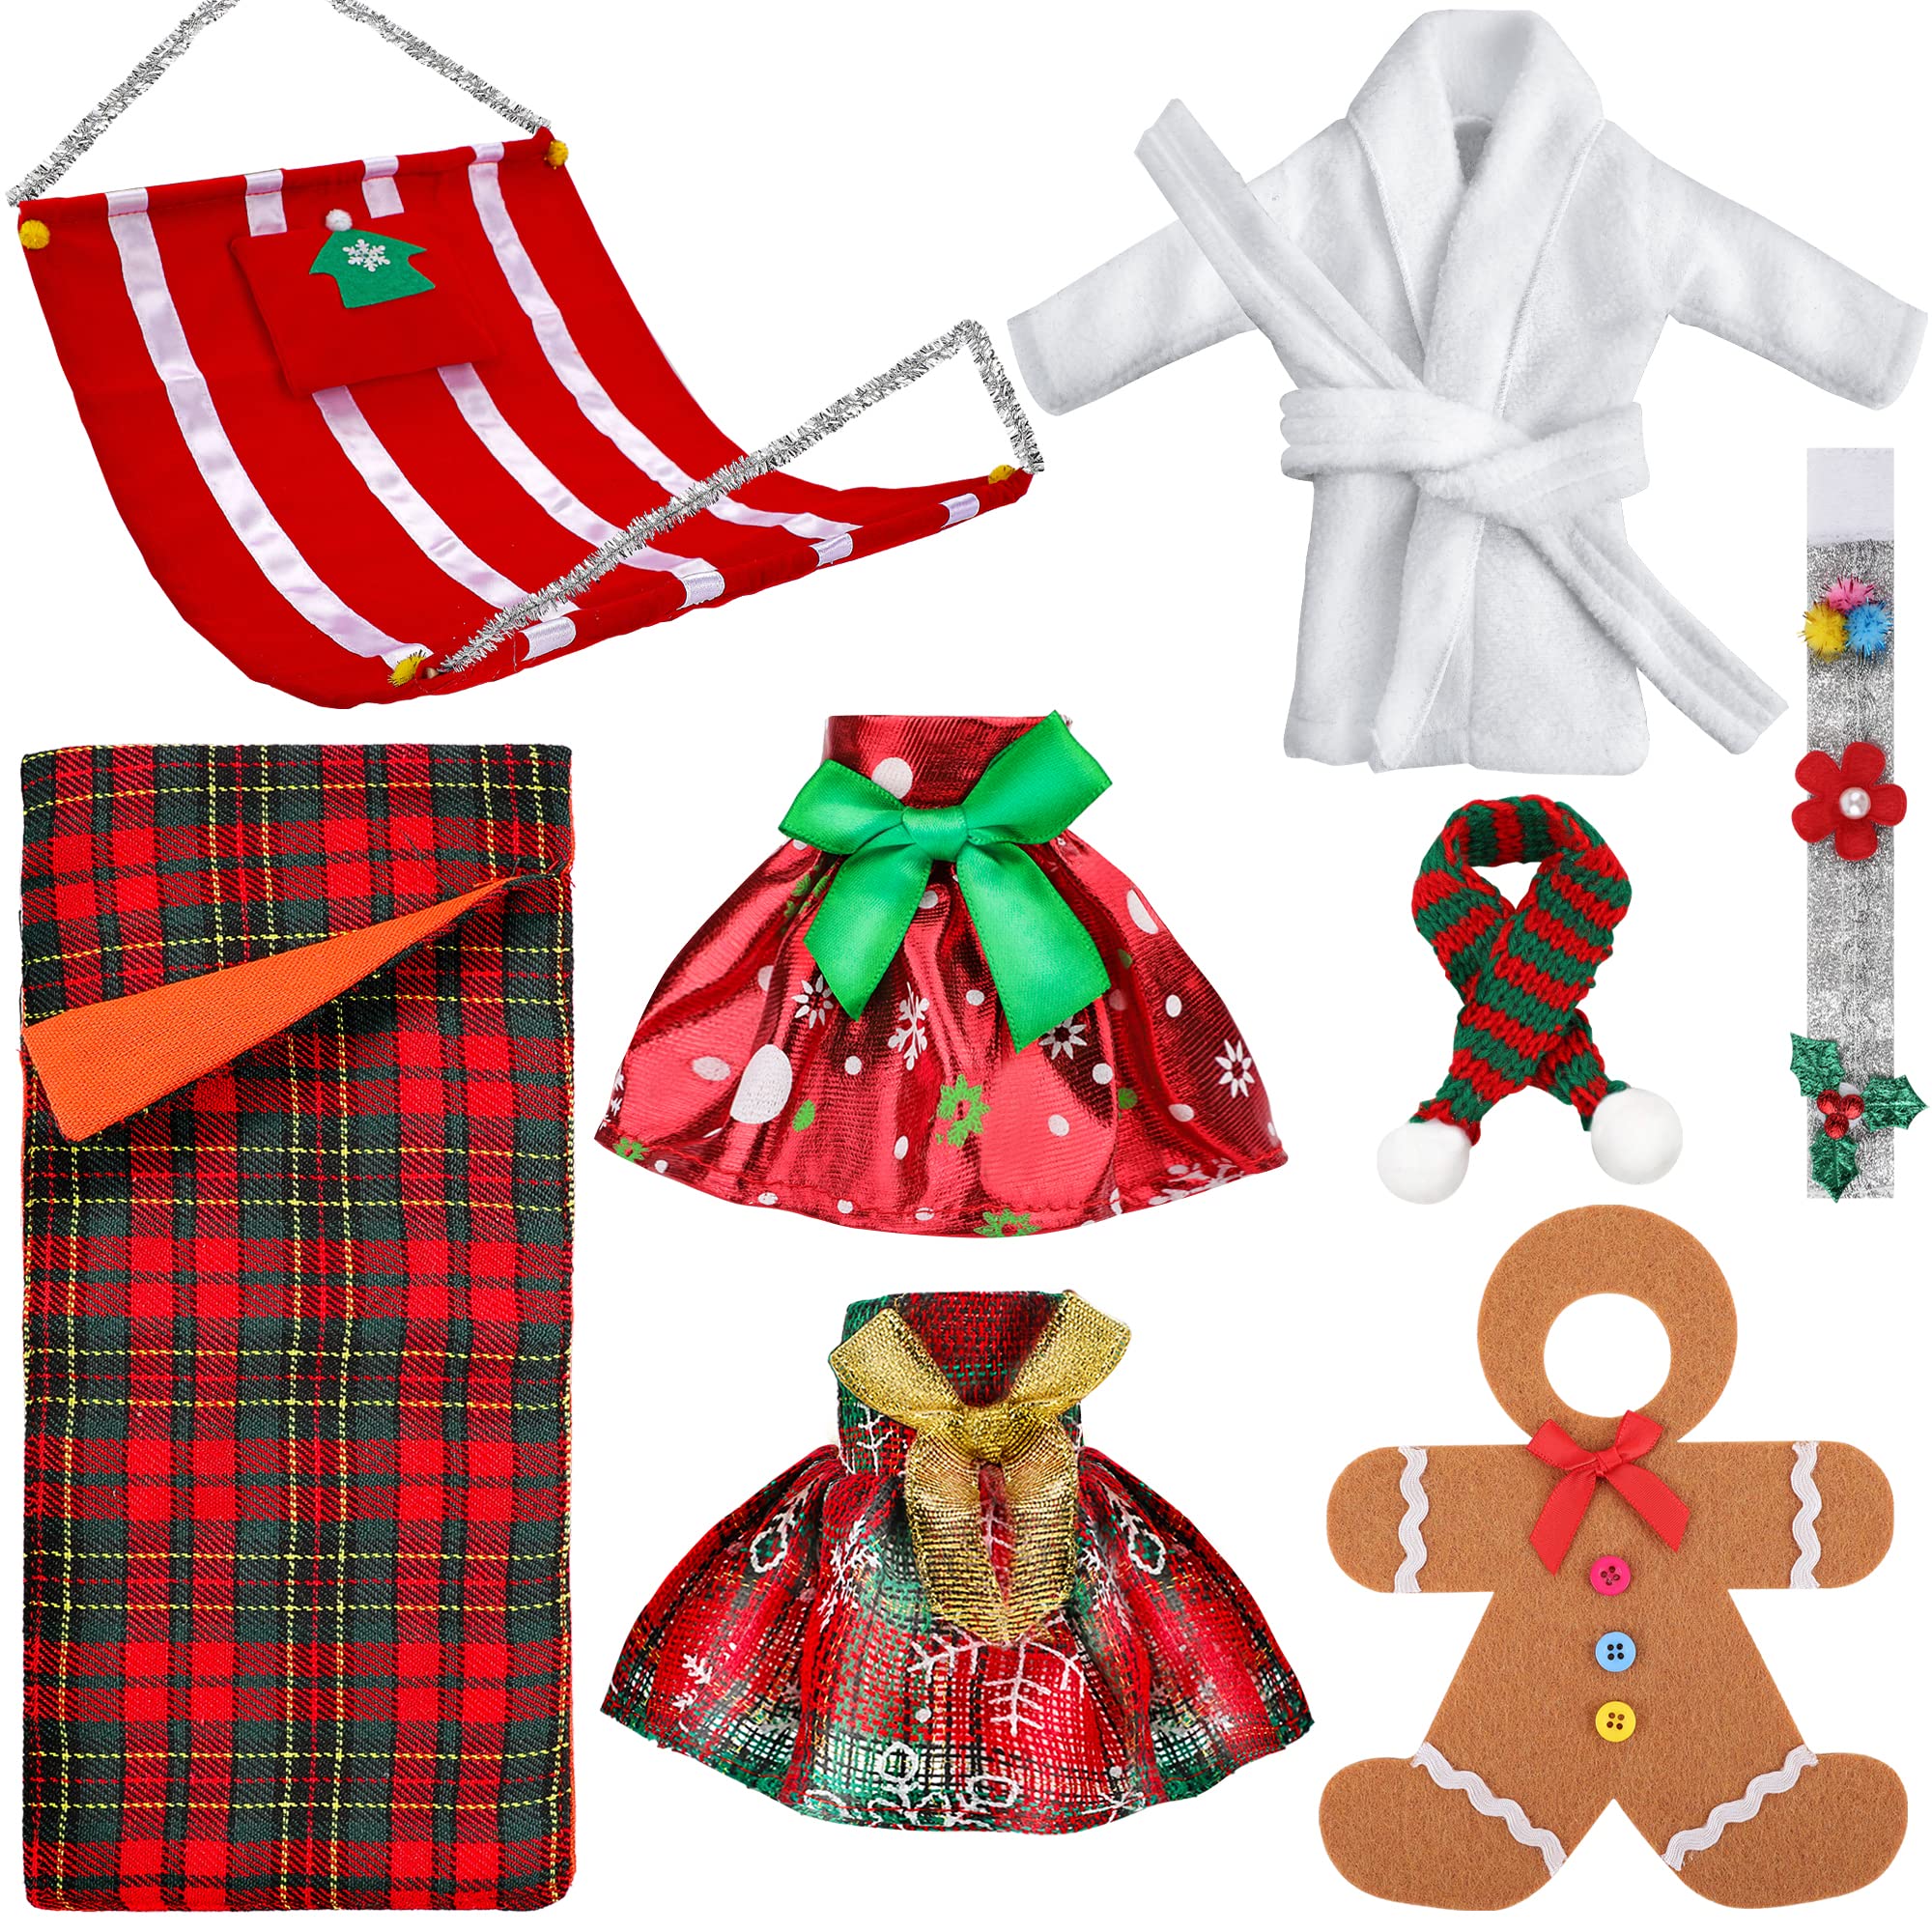 Christmas Elf Doll Accessories Christmas Doll Clothing Costume Accessories for Elf Doll Including Skirts, Bathrobe, Sleeping Bag, Scarf, Headbands, Hammock, Gingerbread Man Costume